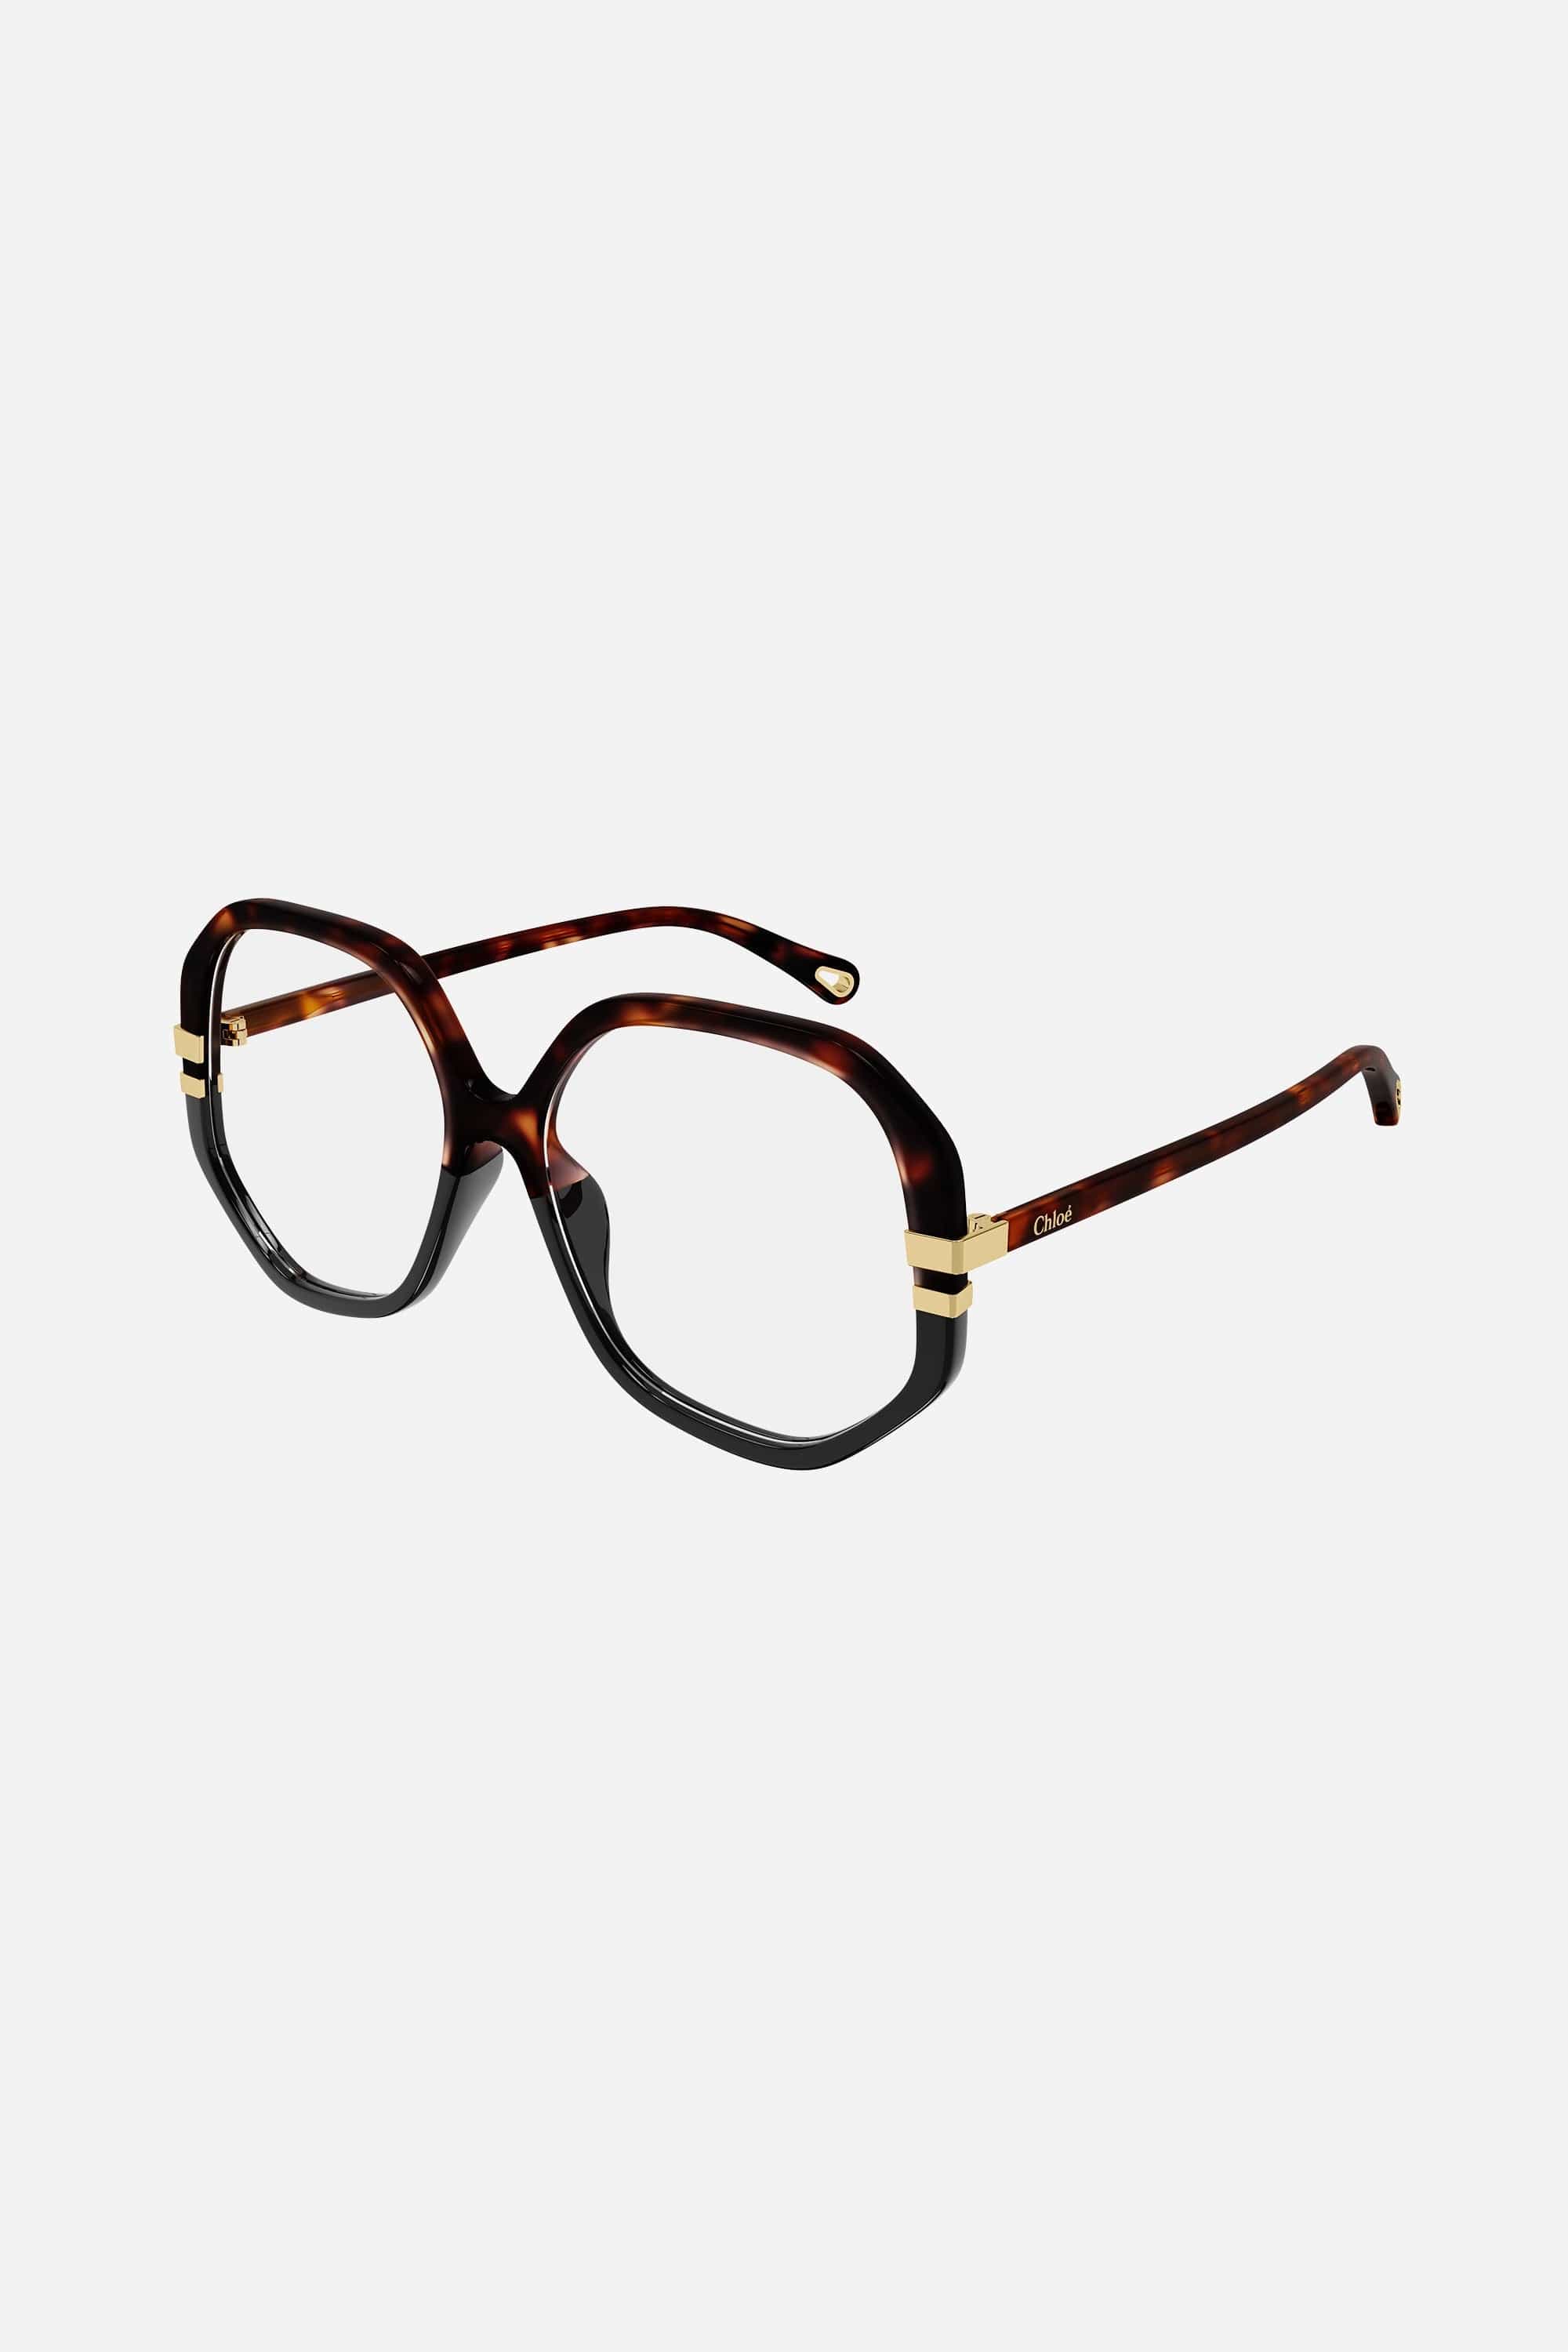 Chloé optical geometric havana shades sunglasses - Eyewear Club